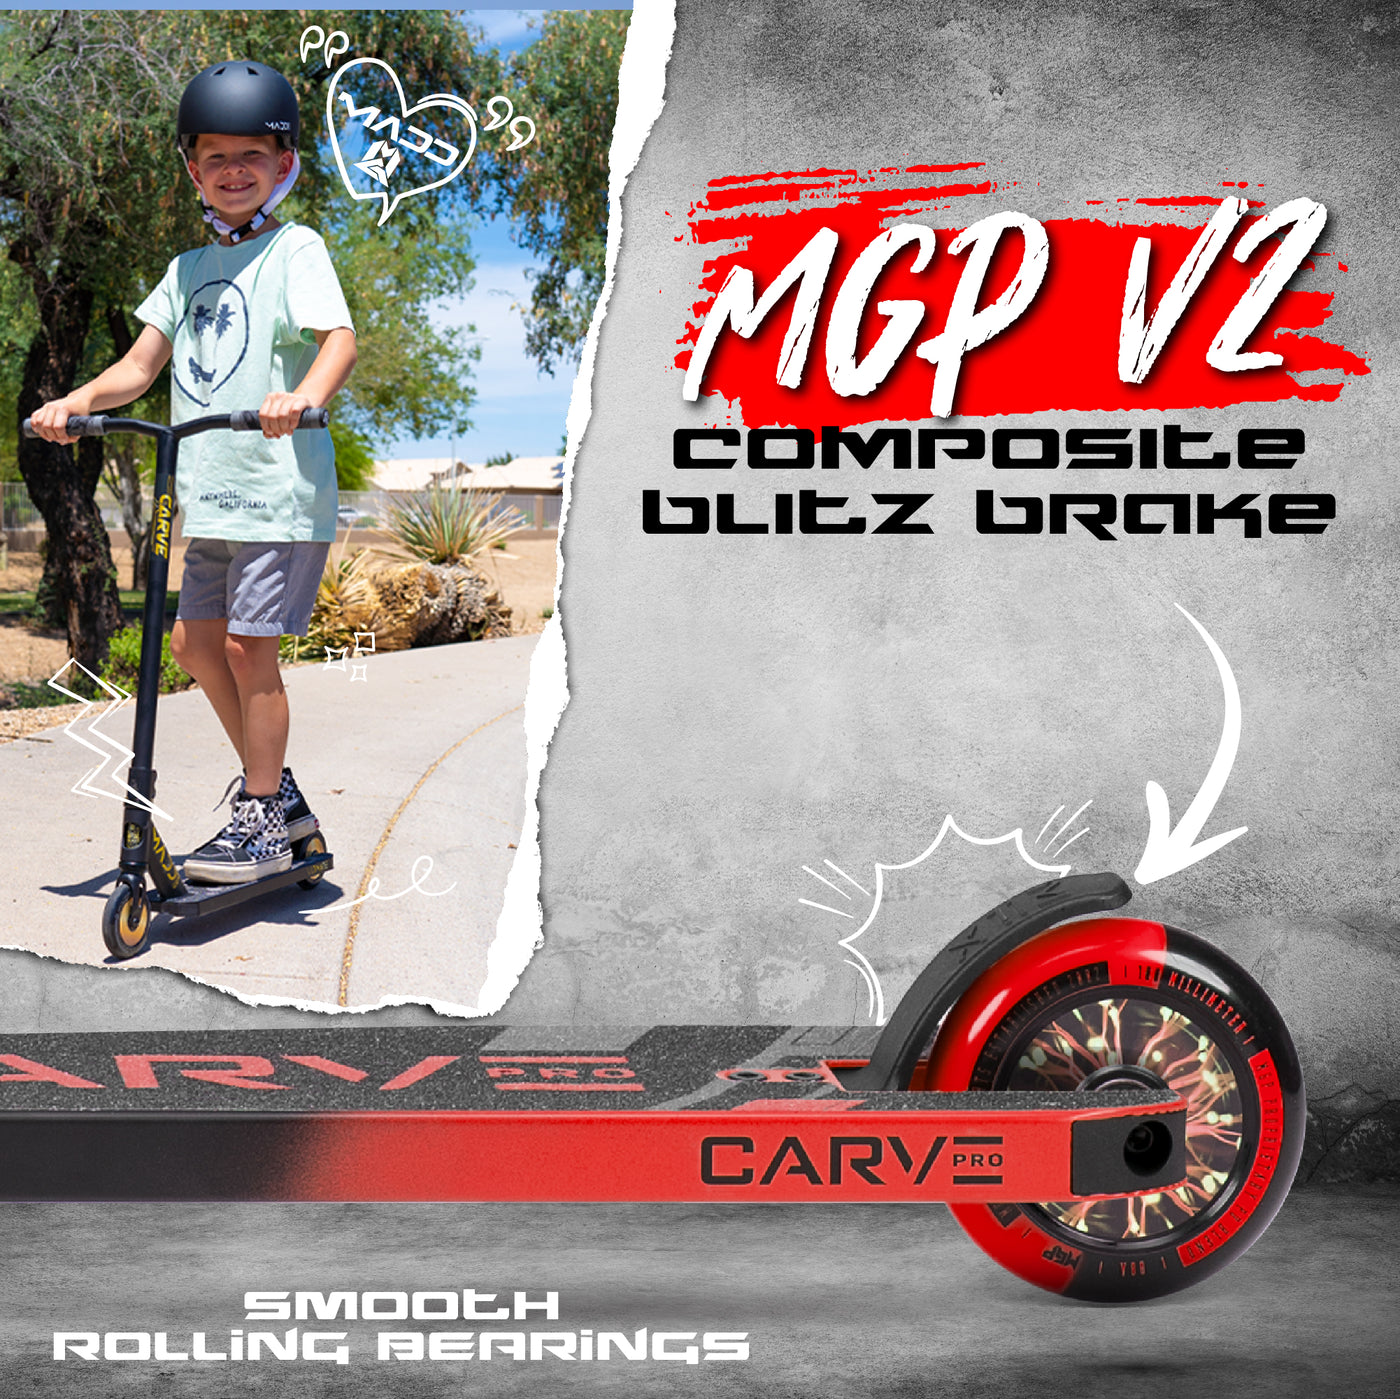 Madd Gear MGP Pro Carve Razor Kick Stunt Trick Scooter Smooth Rolling Black Red Kids Children